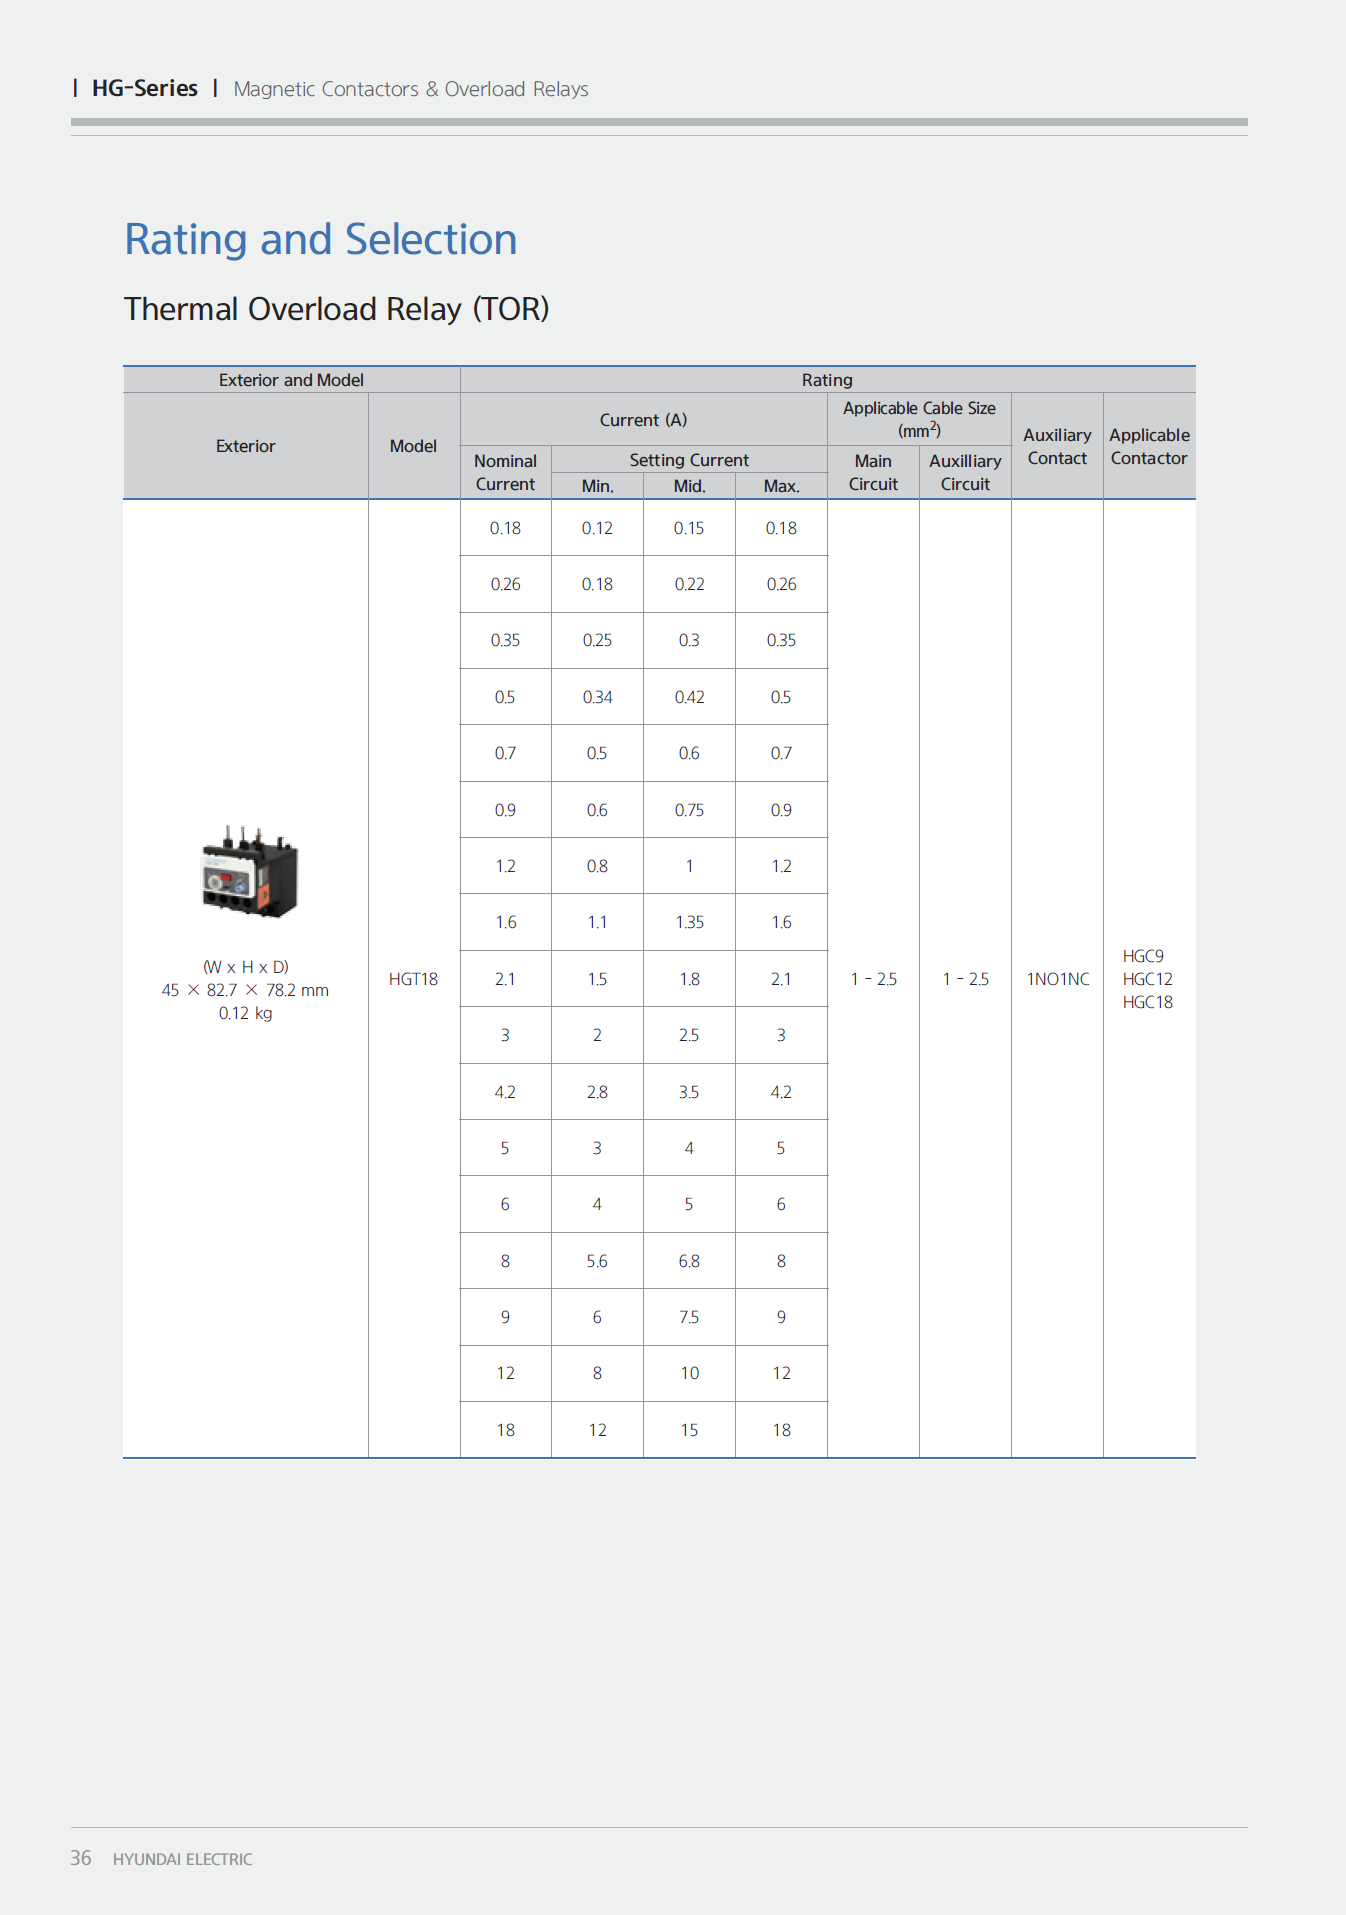 Hyundai Marine Thermal Overload Relay (TOR)-HGT150K